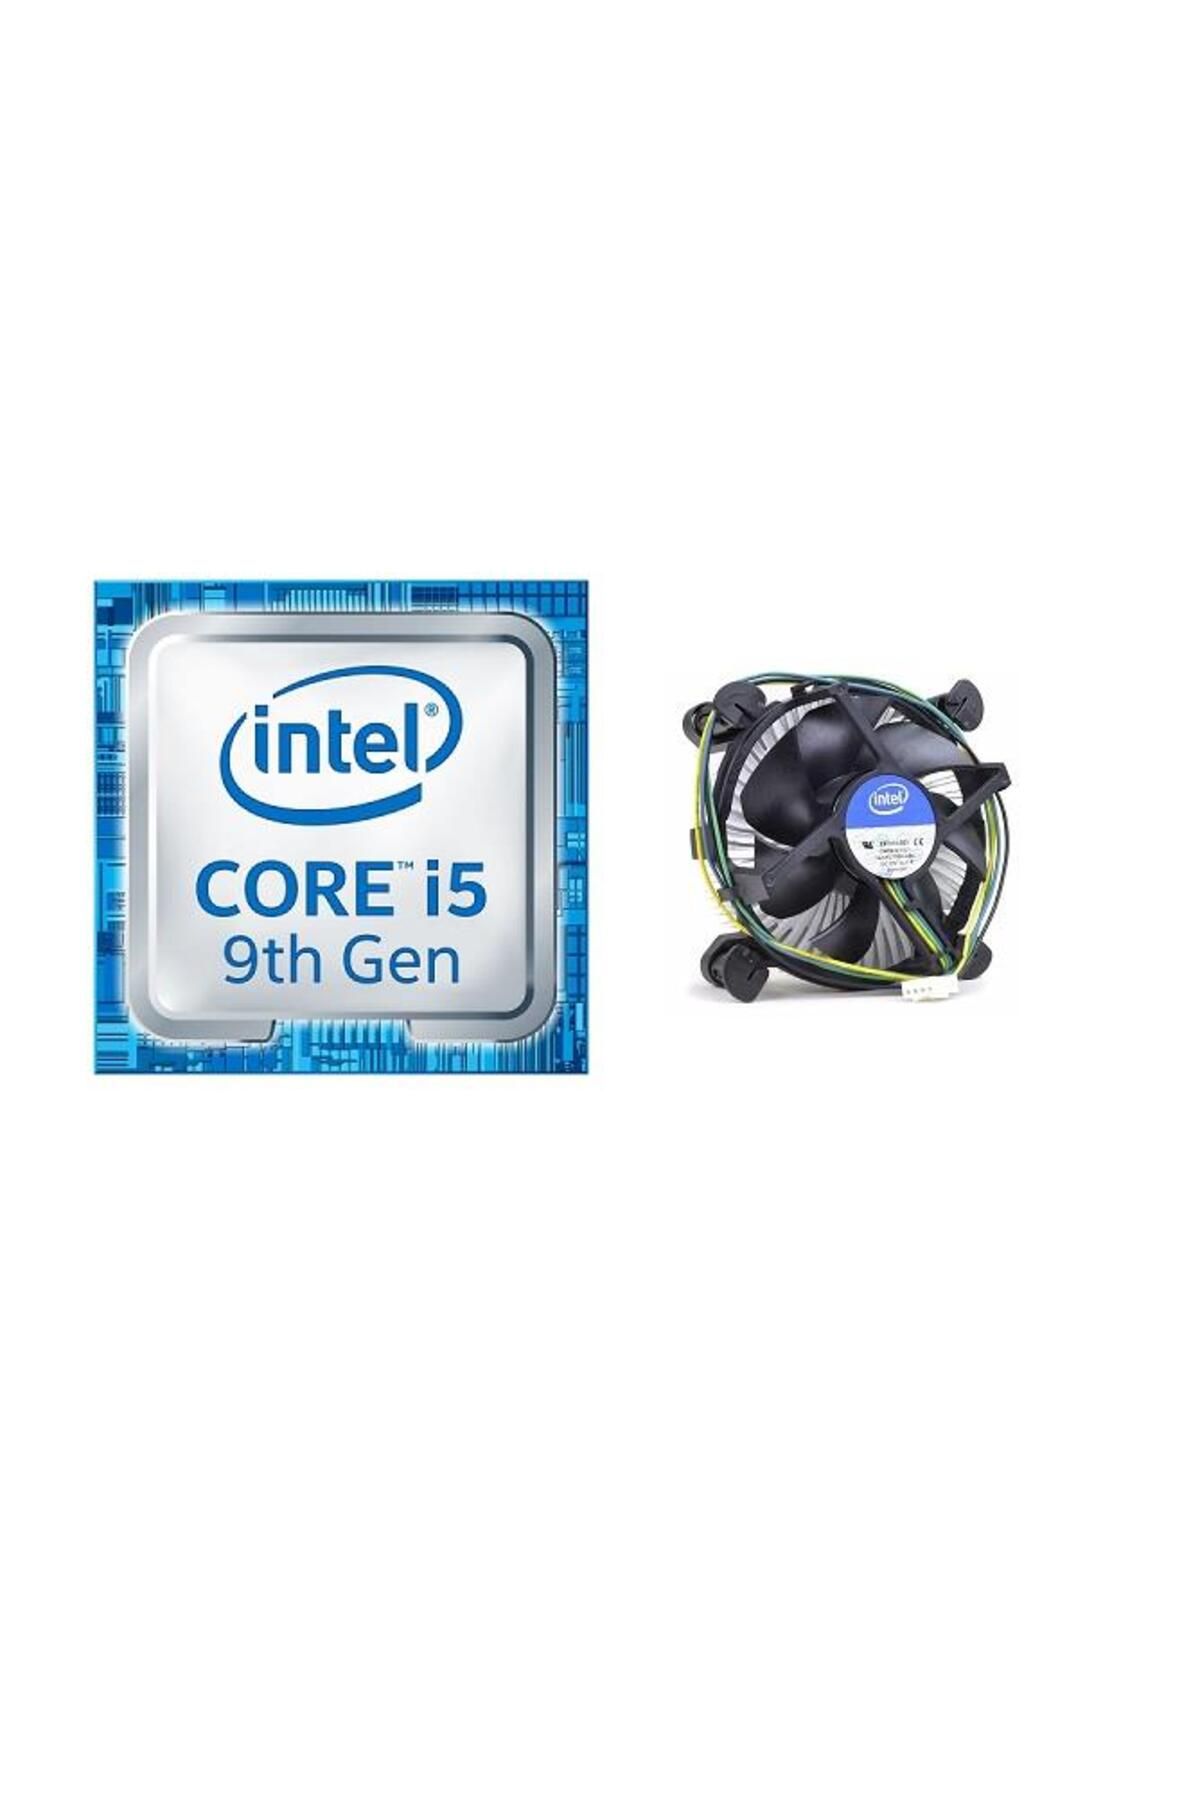 Intel Core i5-9400F 2.9 GHz LGA1151 9 MB İşlemci + Intel Fan ( Kutusuz/Fanlı)